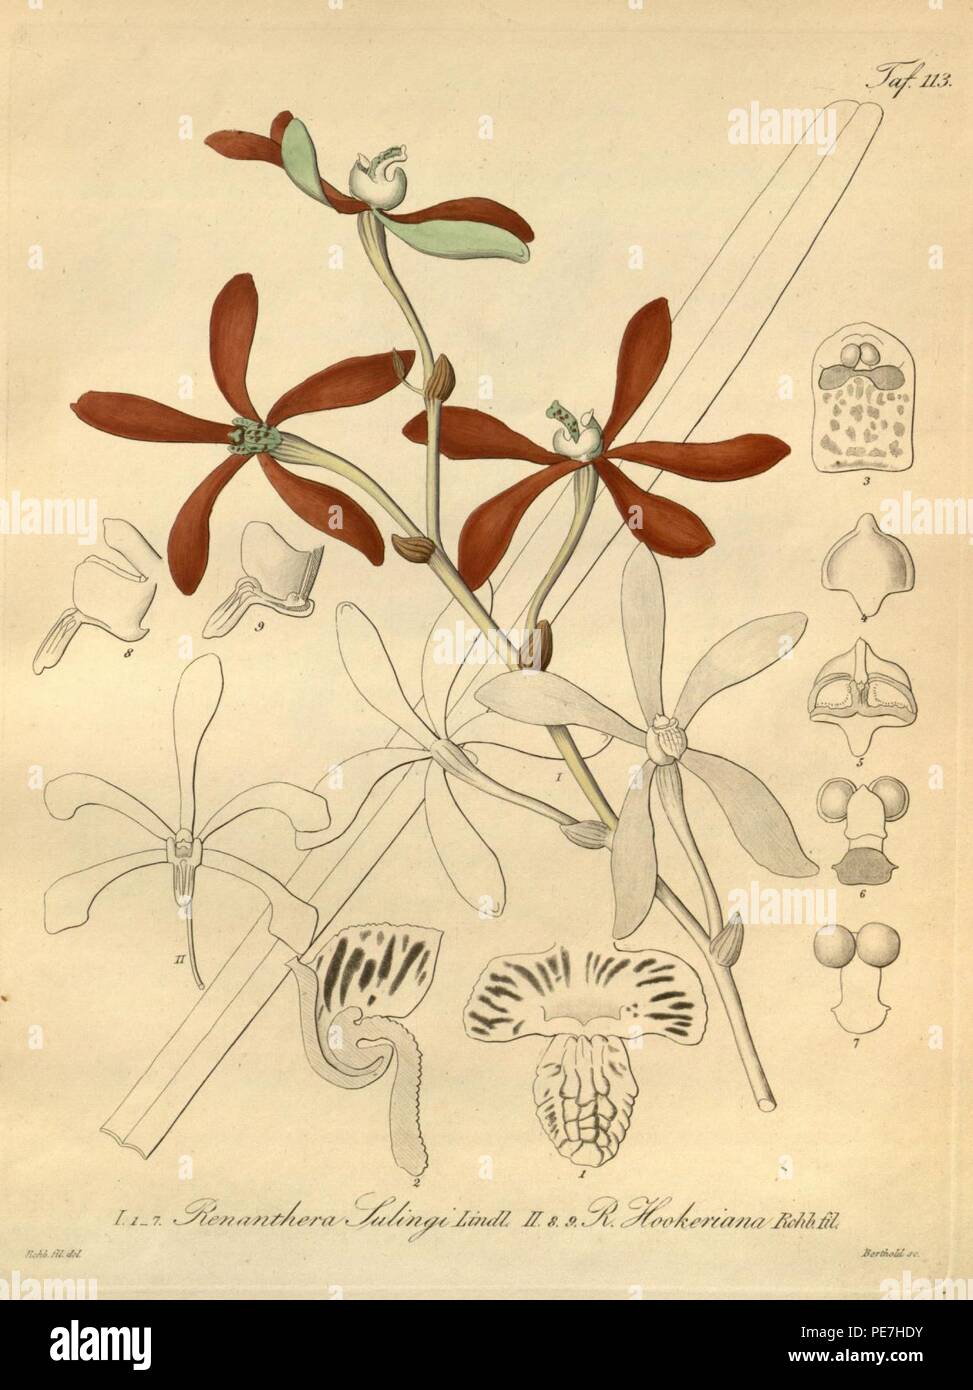 Armodorum sulingi (as Renanthera sulingi) - Arachnis hookeriana (as Renanthera hookeriana) - Xenia 2 pl 113. Stock Photo